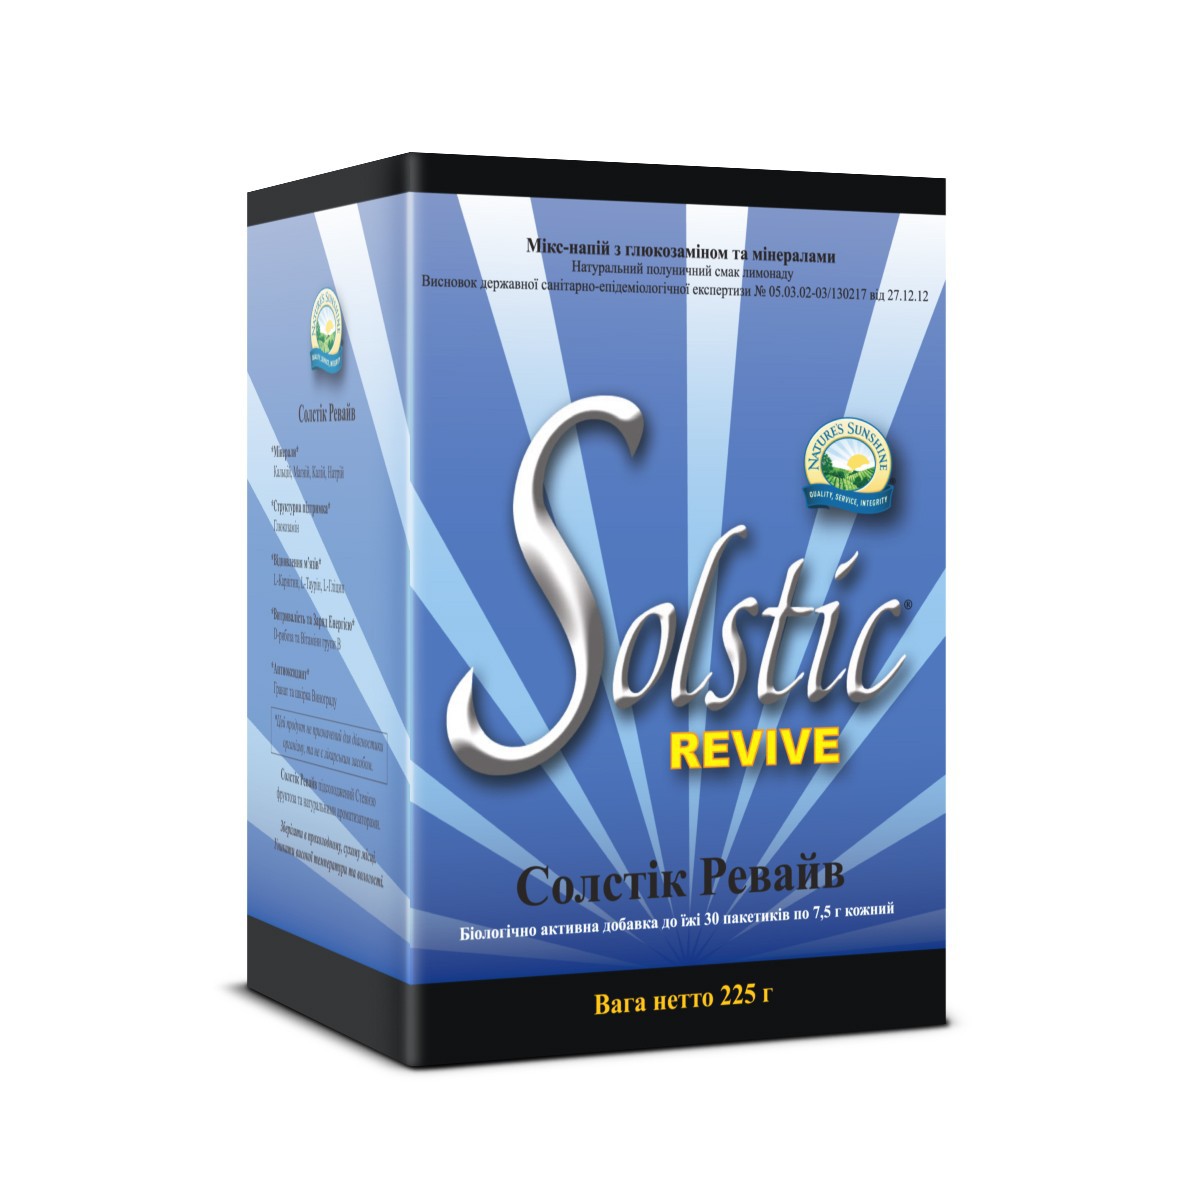 Solstic Revive - Солстик Ревайв - БАД Nature's Sunshine Products (NSP)